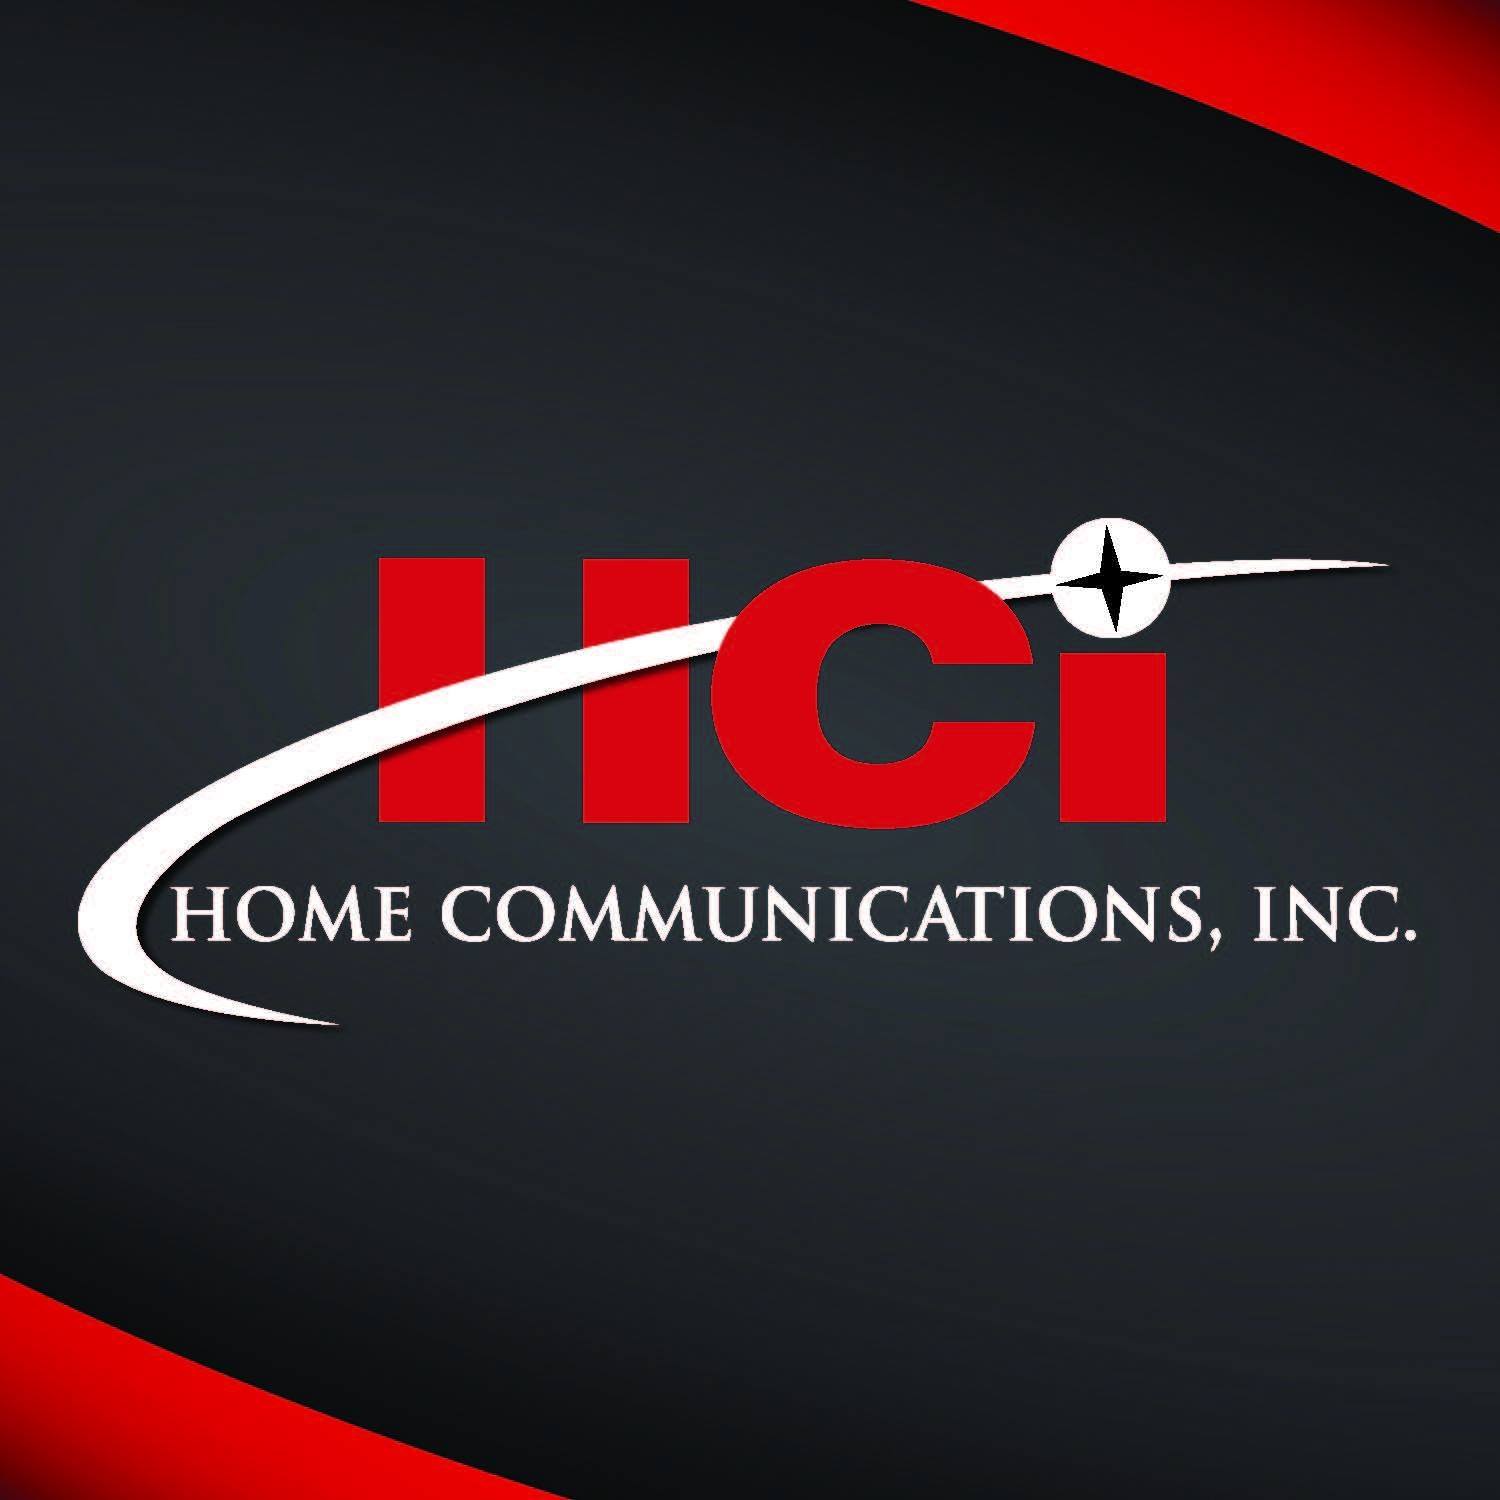 Home Communications